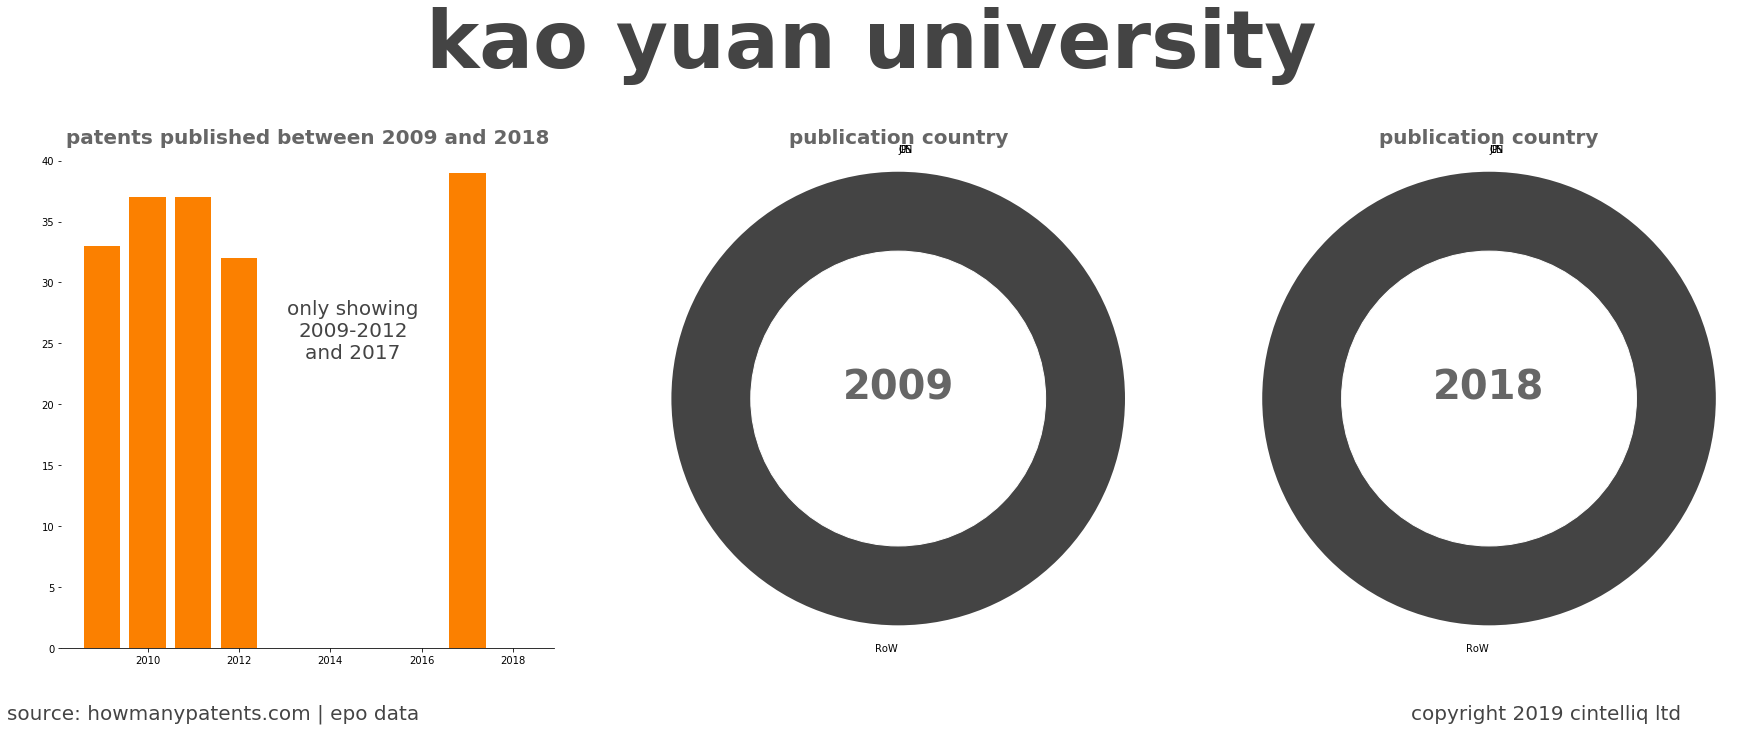 summary of patents for Kao Yuan University